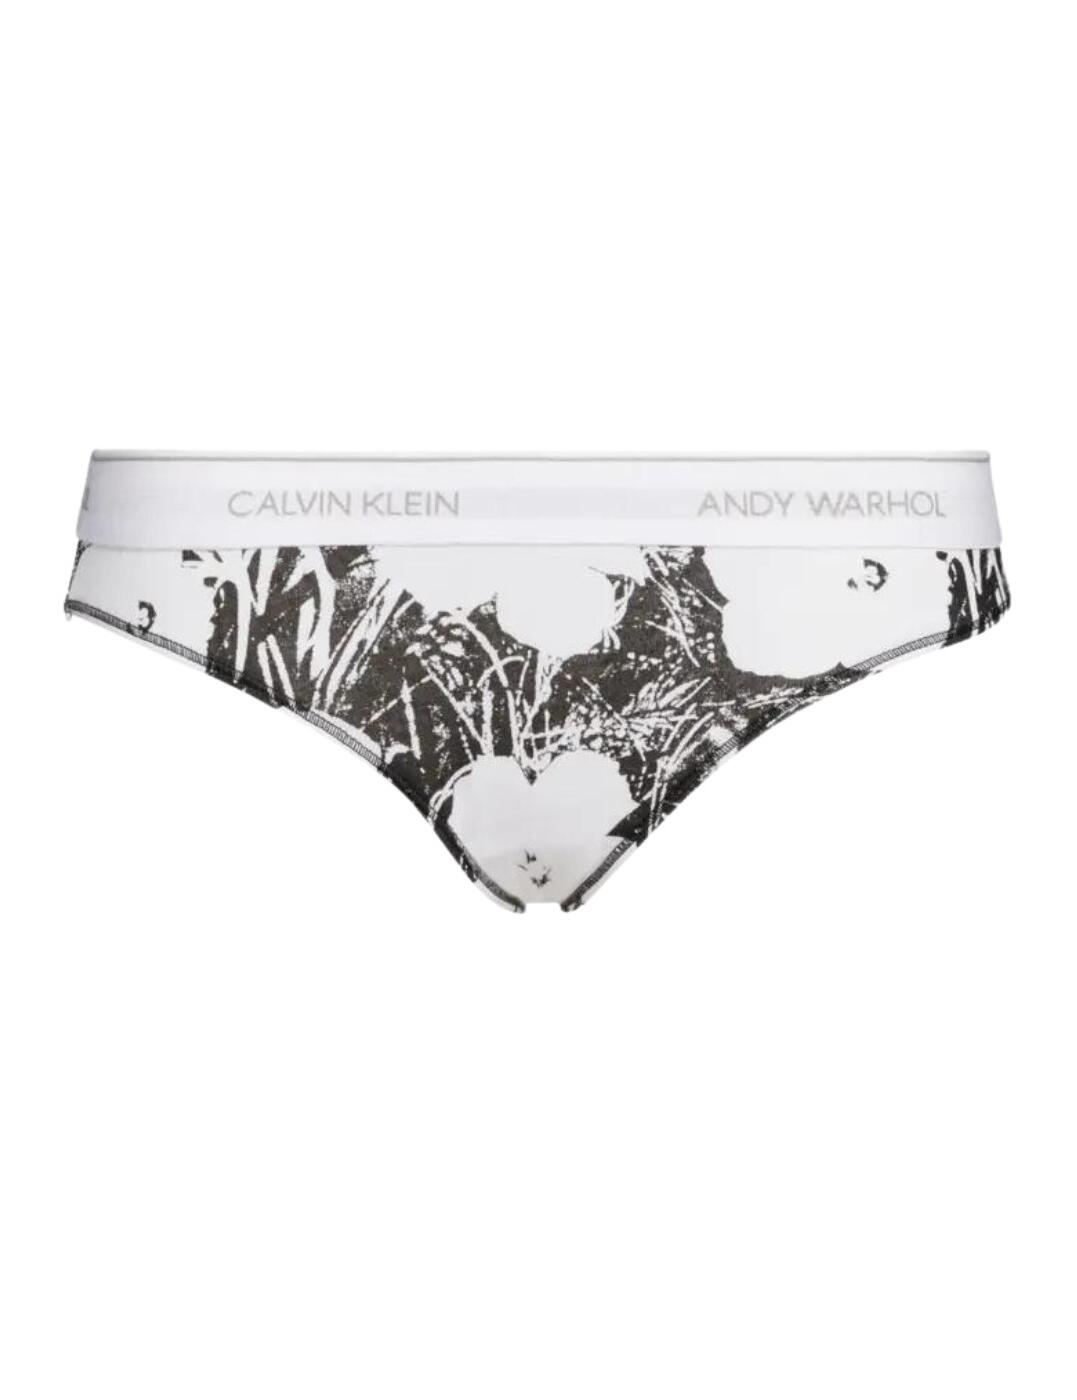  Calvin Klein Andy Warhol Bikini Style Brief  AWH Flowers/ White